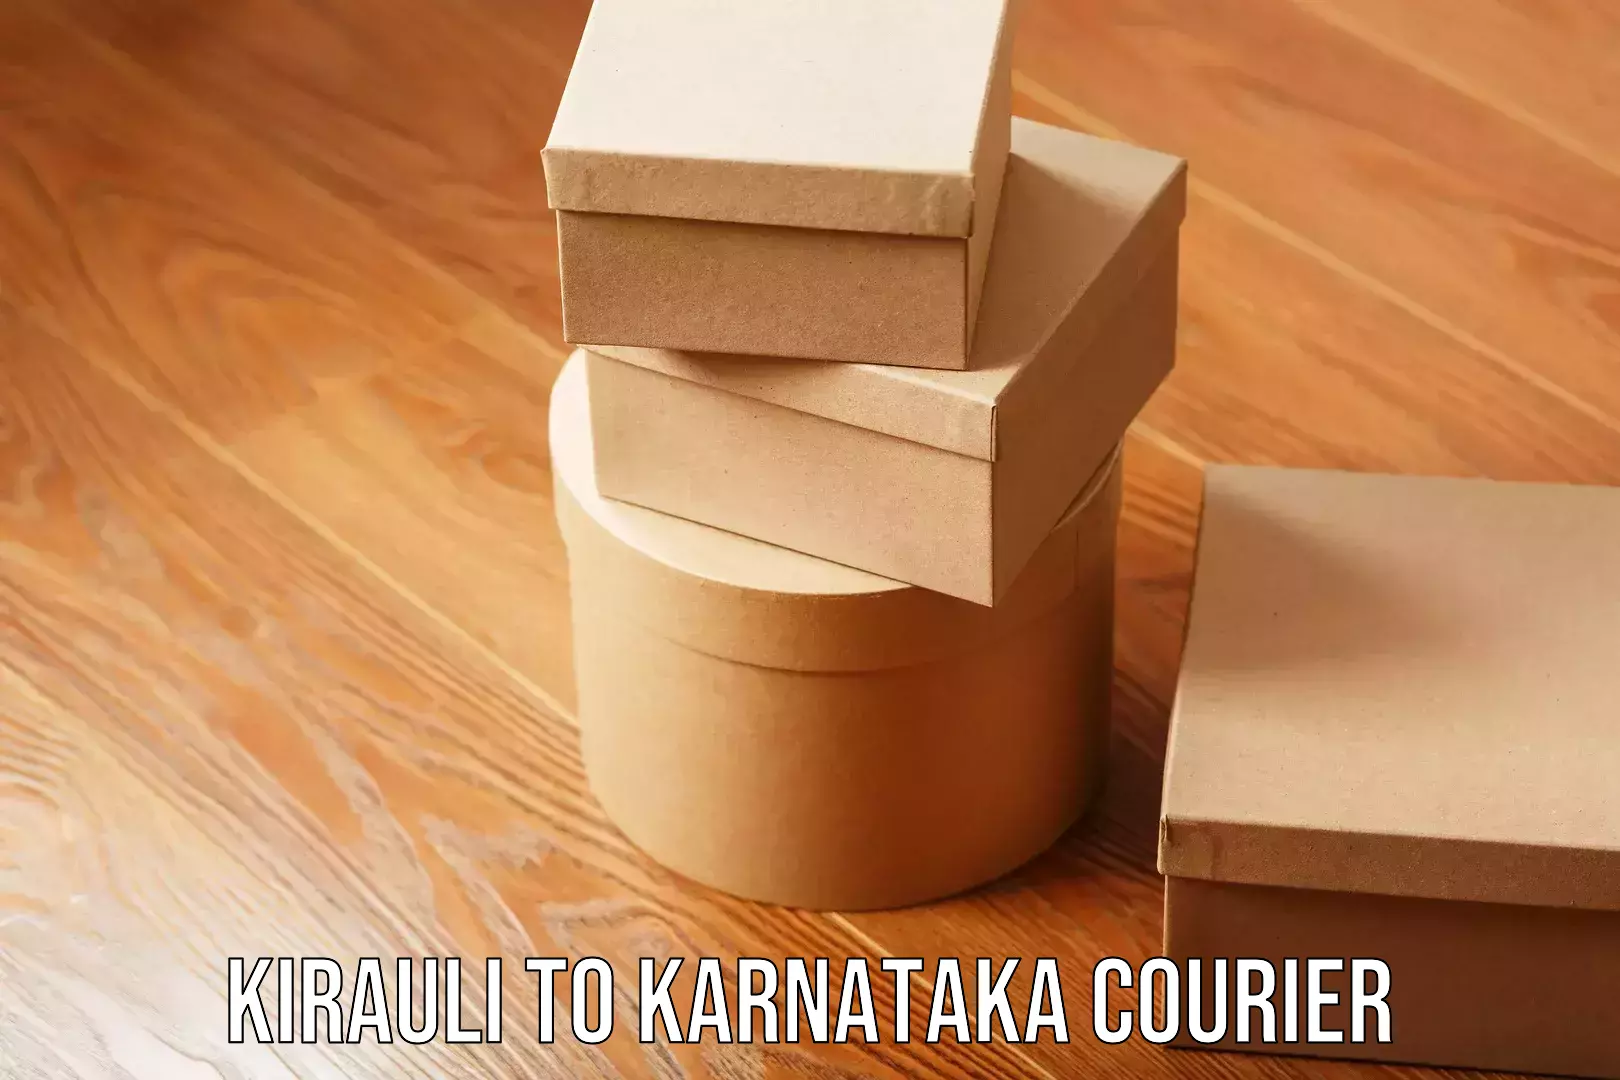 Home moving experts Kirauli to Karnataka